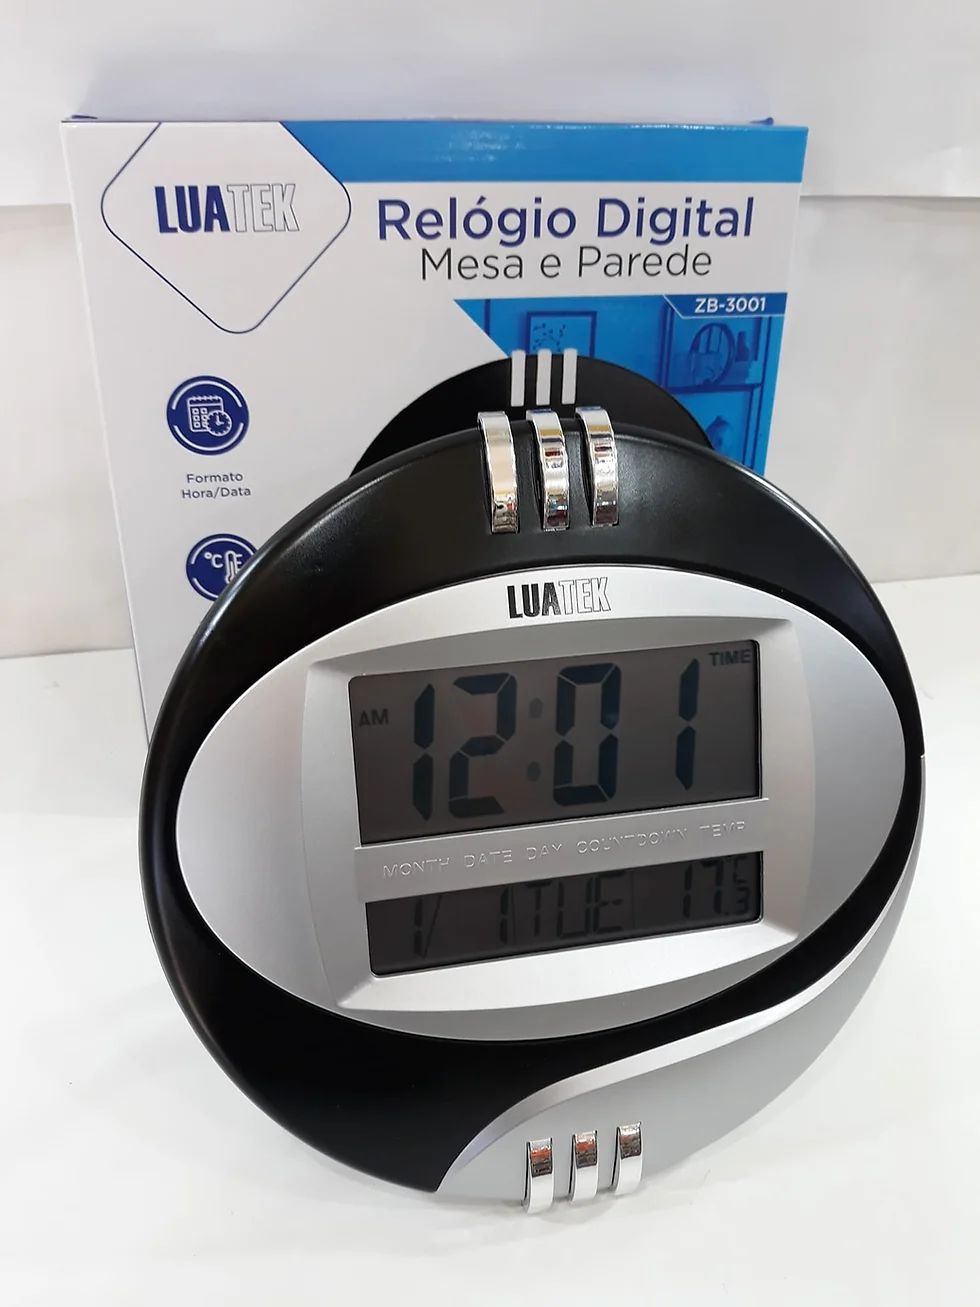 Relógio Digital Mesa E Parede- Luatek - ZB-3001 - Gringolândia